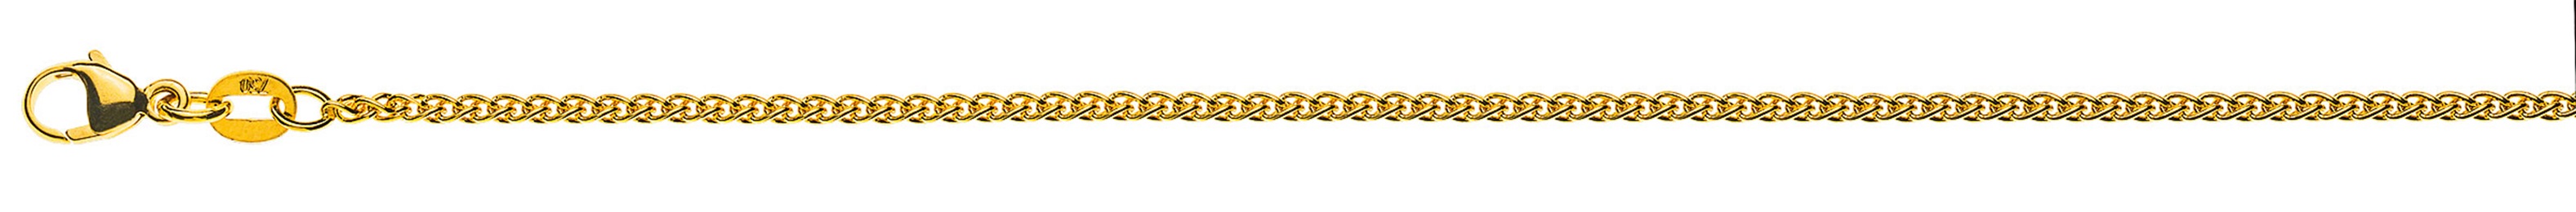 AURONOS Prestige Necklace yellow gold 18K cable chain 55cm 1.6mm